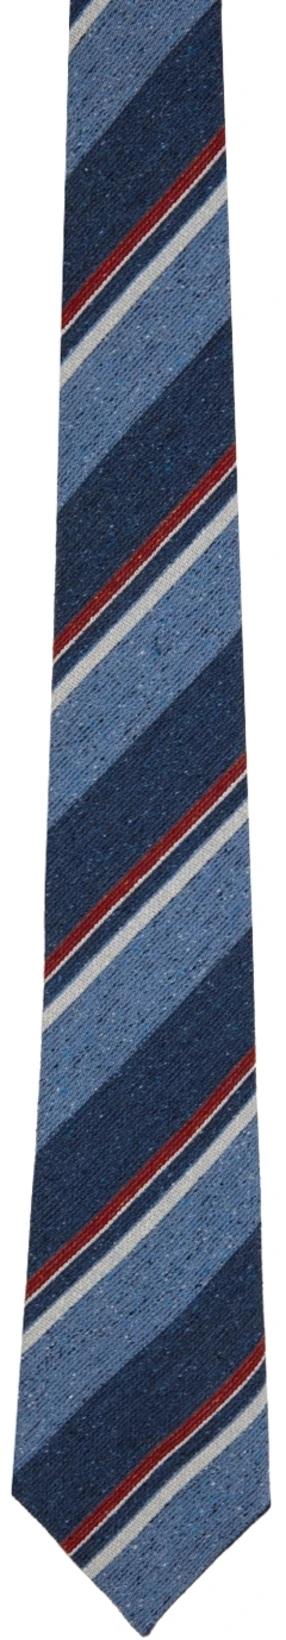 Blue Speckle Stripe Tie by PAUL SMITH